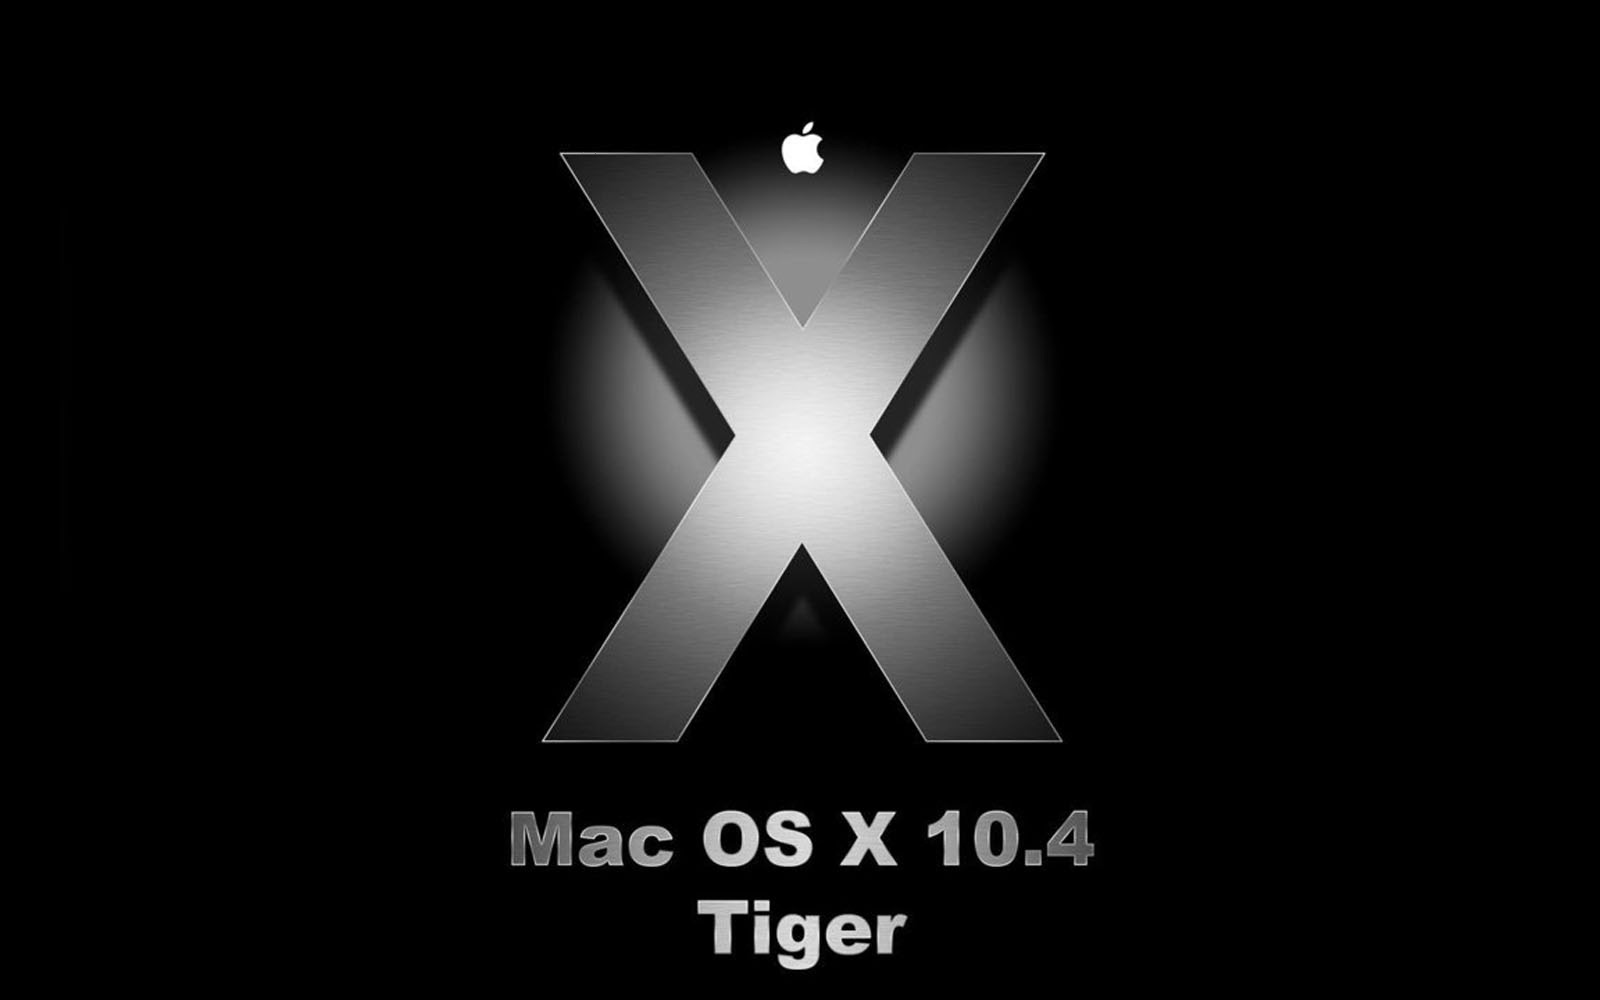 Mac os x tiger 10.4.11 iso free download